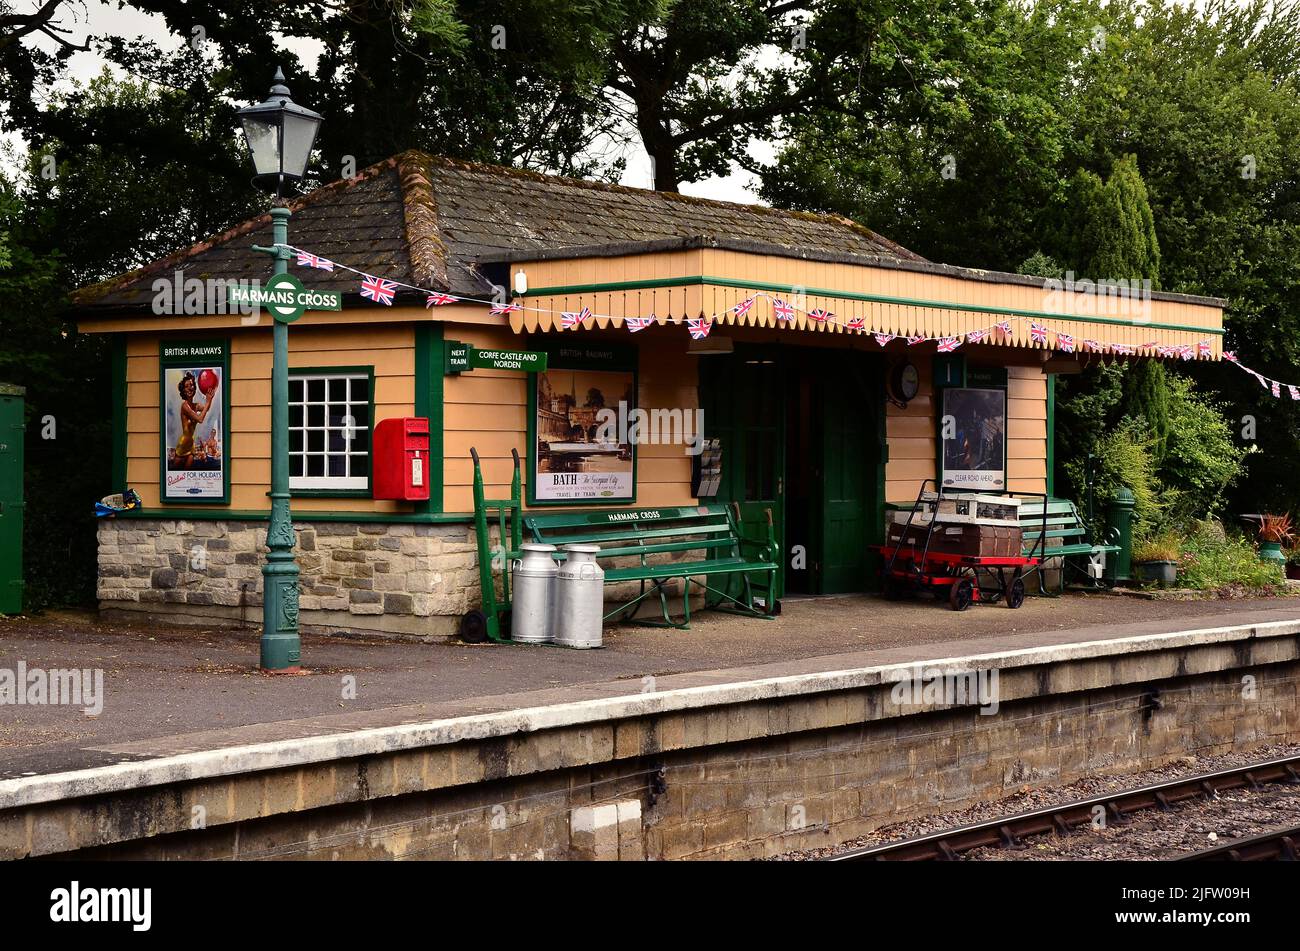 Harman's Cross station on the Swanage steam railway, Dorset, UK Stock Photo